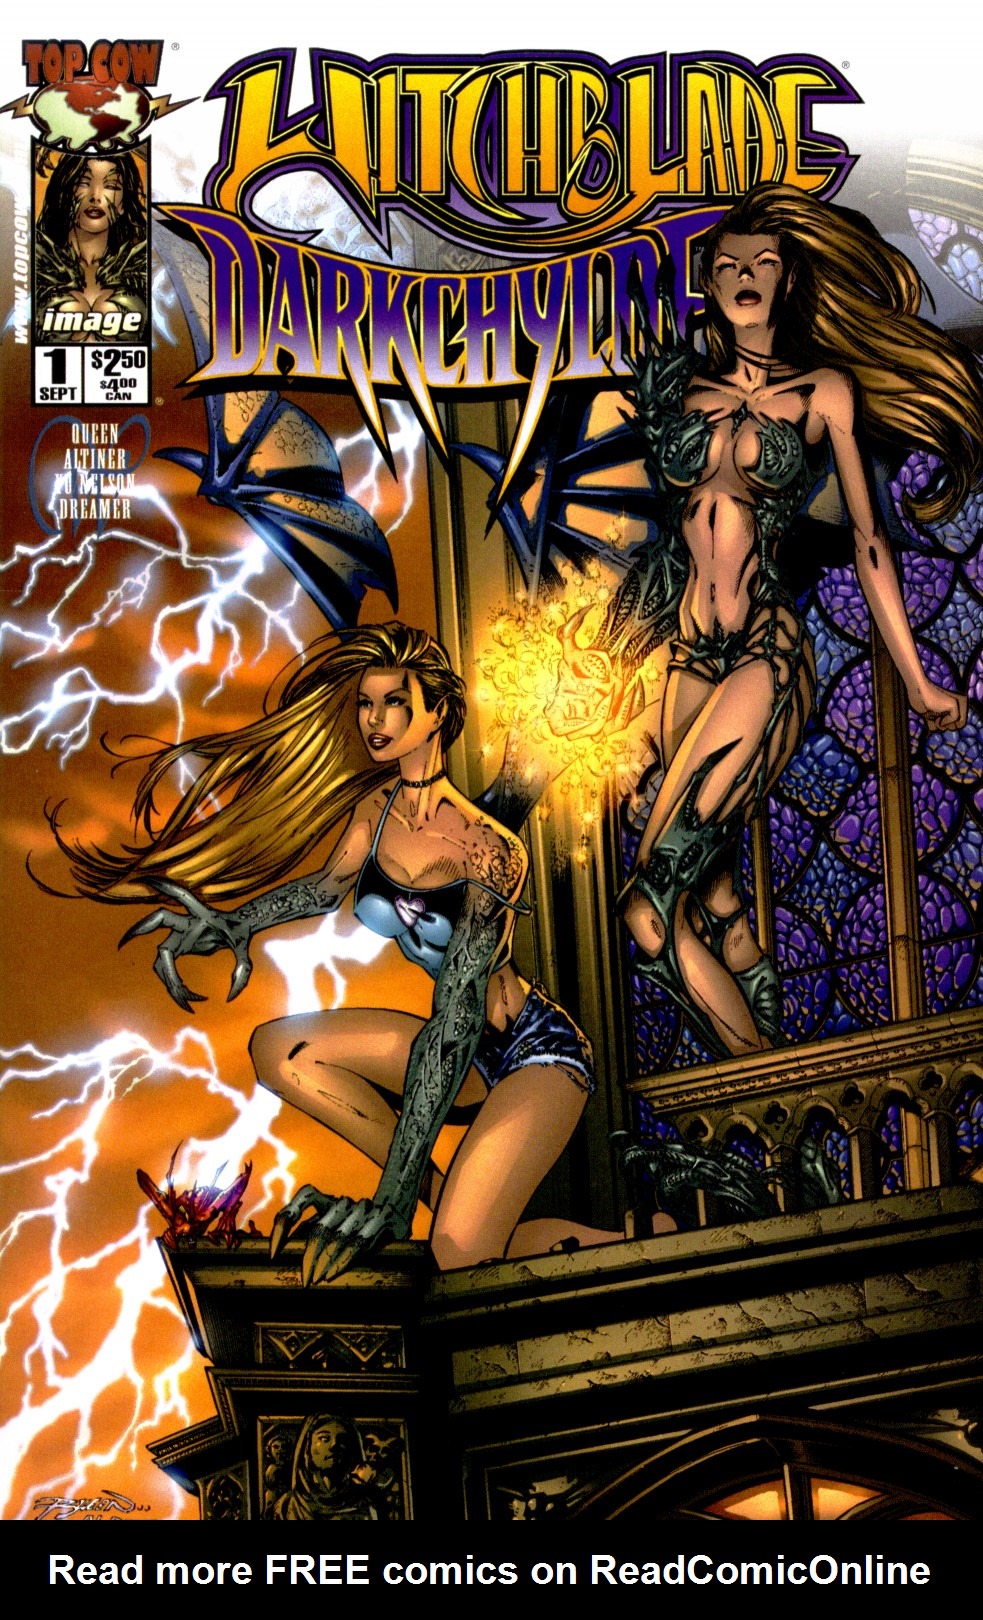 Read online Witchblade/Darkchylde comic -  Issue # Full - 1